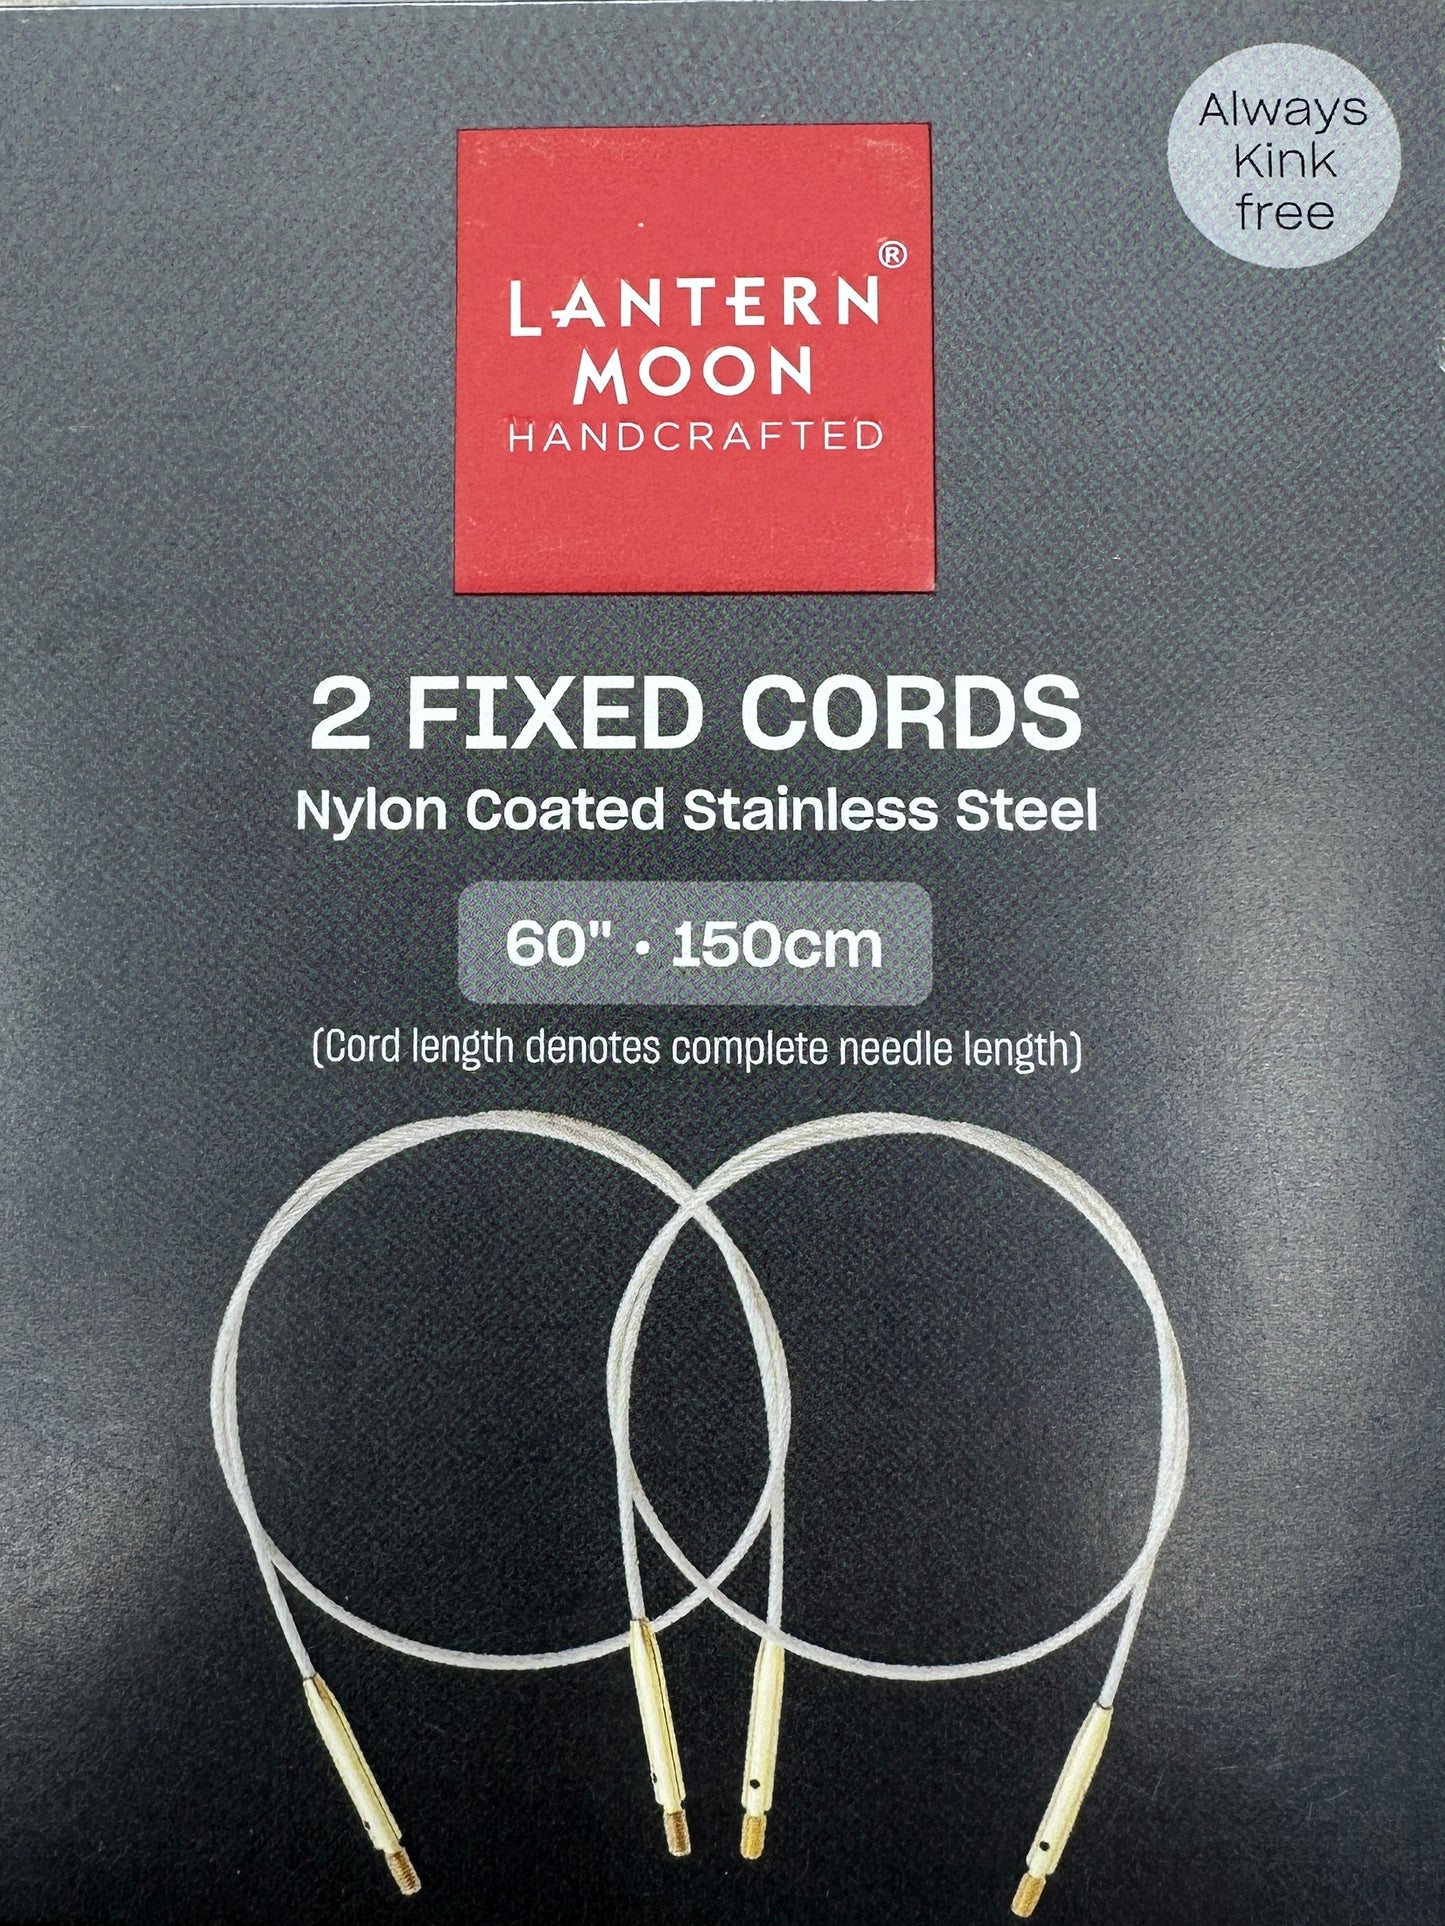 Lantern Moon - Fixed Circular Cords